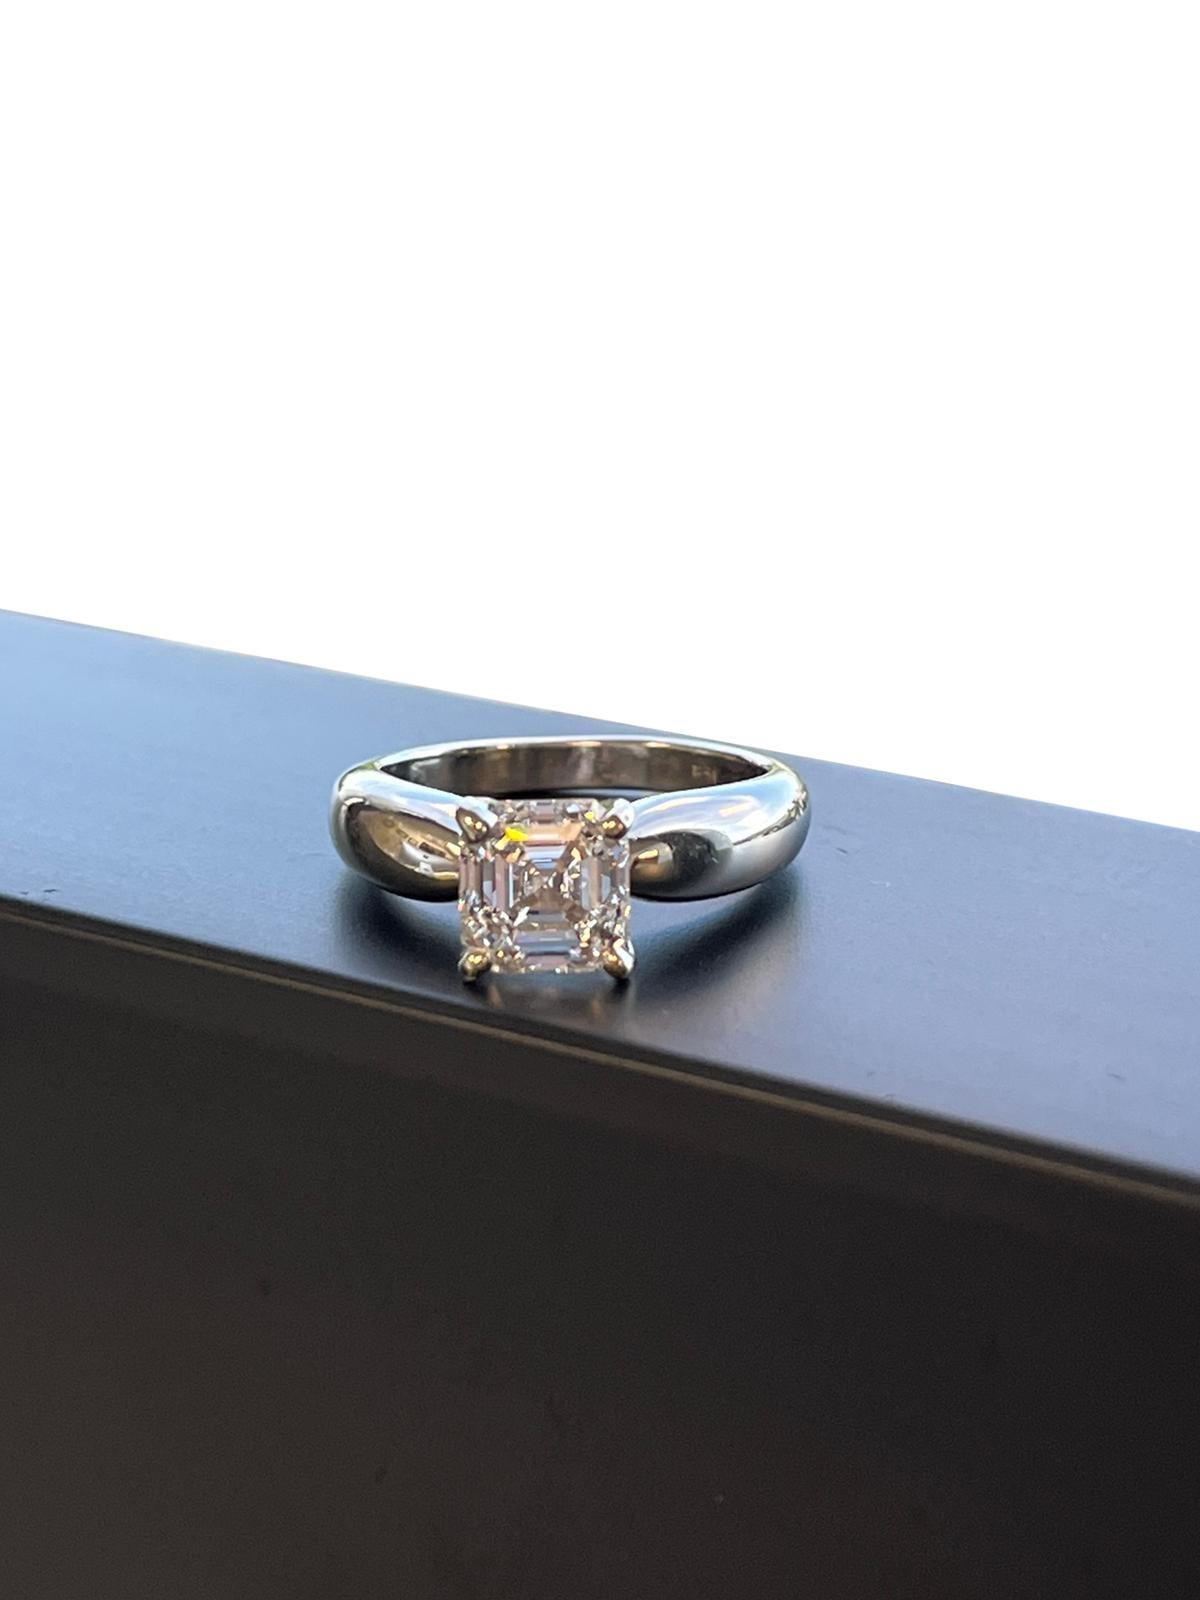 Flawless GIA Certified 2.01 Carat Asscher Cut Diamond Ring 18 Karat White Gold For Sale 3